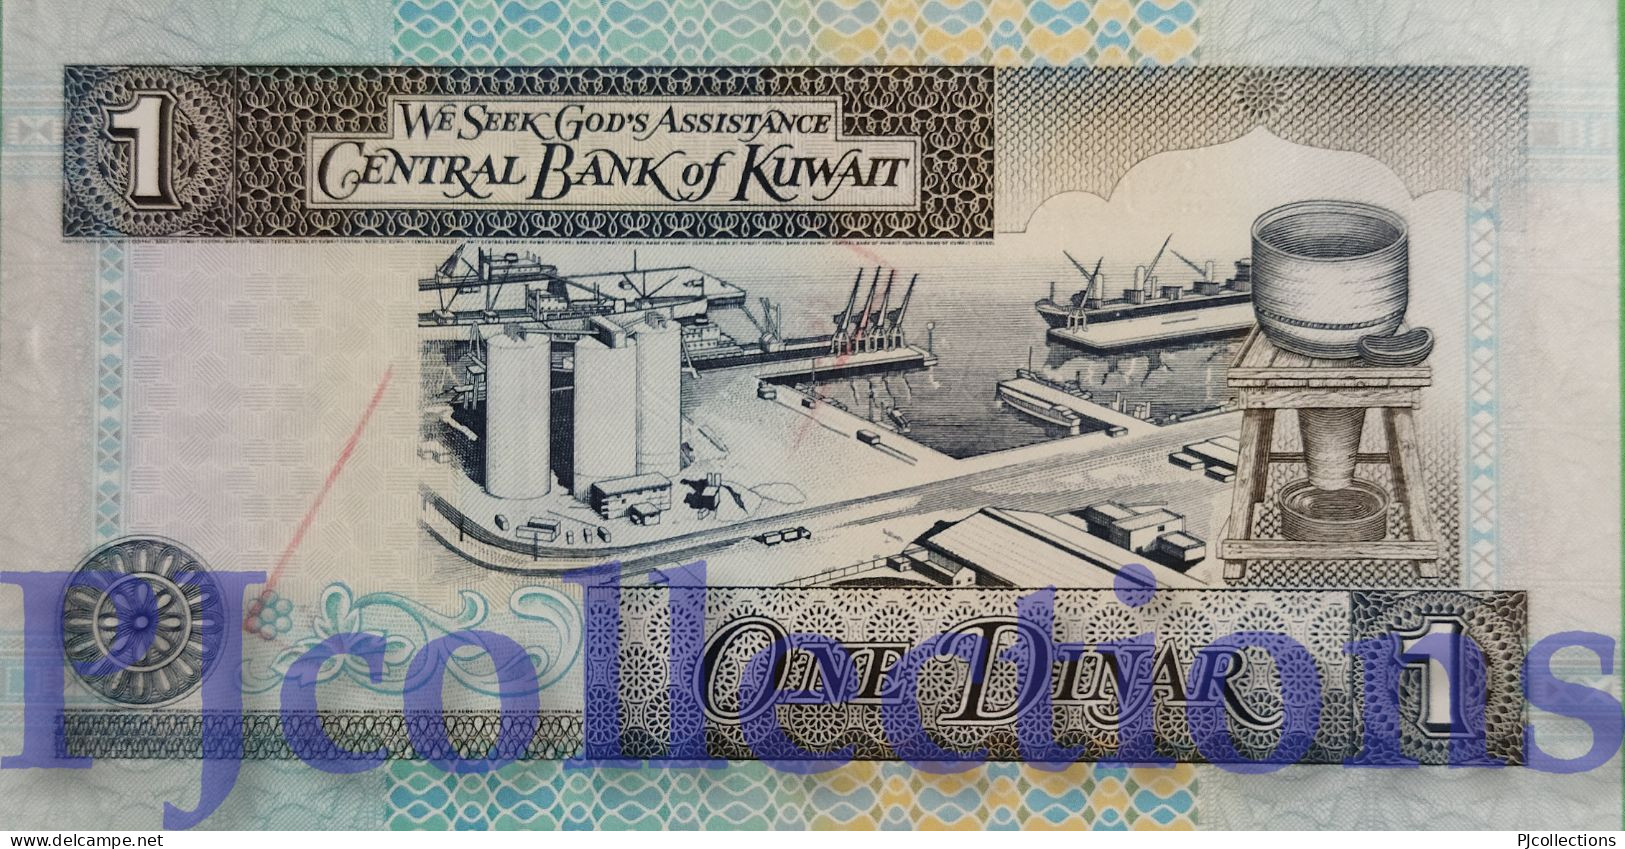 KUWAIT 1 DINAR 1994 PICK 25f UNC GOOD SERIAL NUMBER "080800" - Kuwait